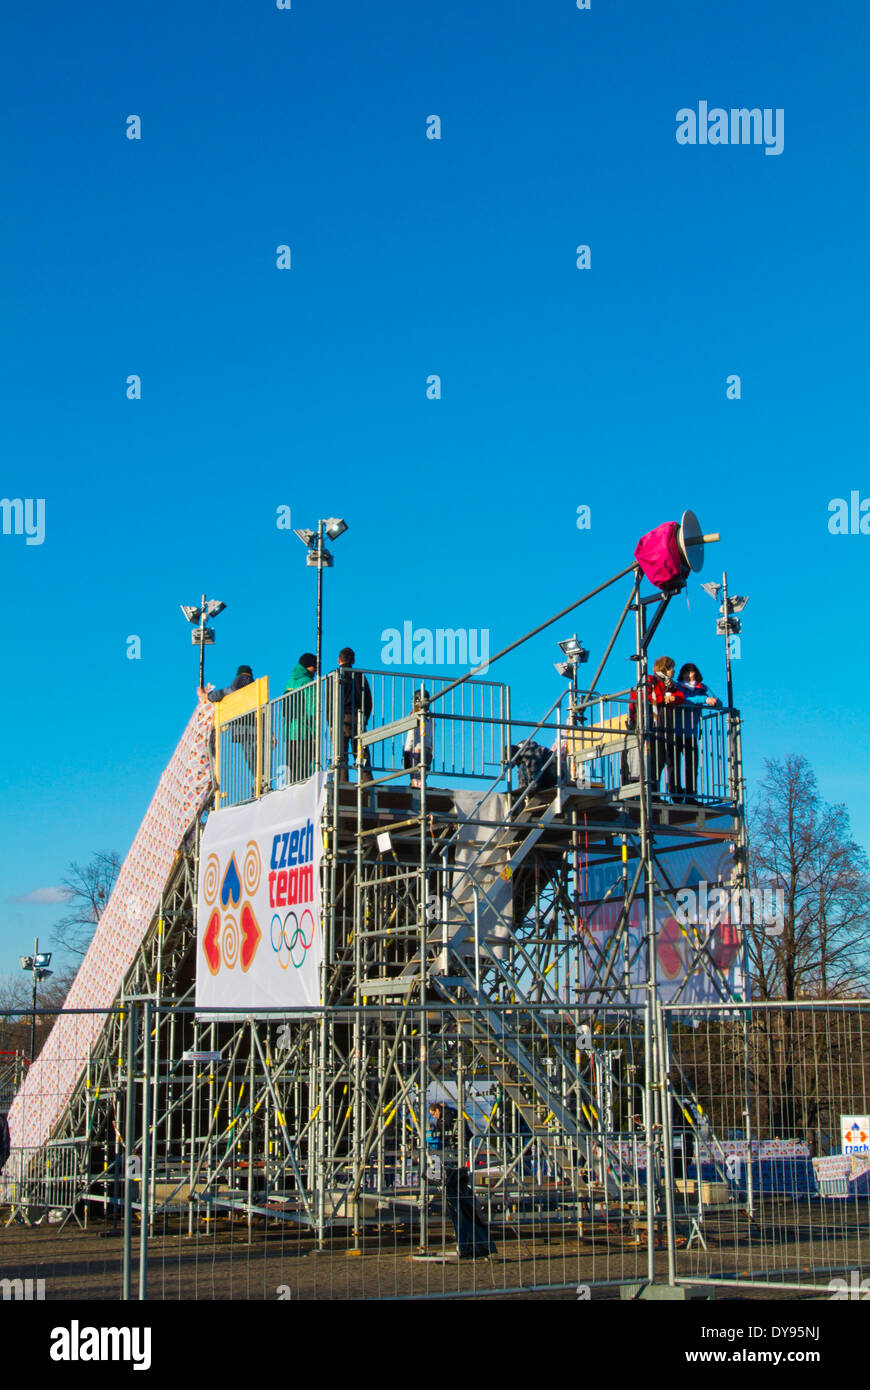 Olympiastadt Sotschi 2014 Winter Olympics Themenpark, Letenske Sady Park, Prag, Tschechische Republik, Europa Stockfoto